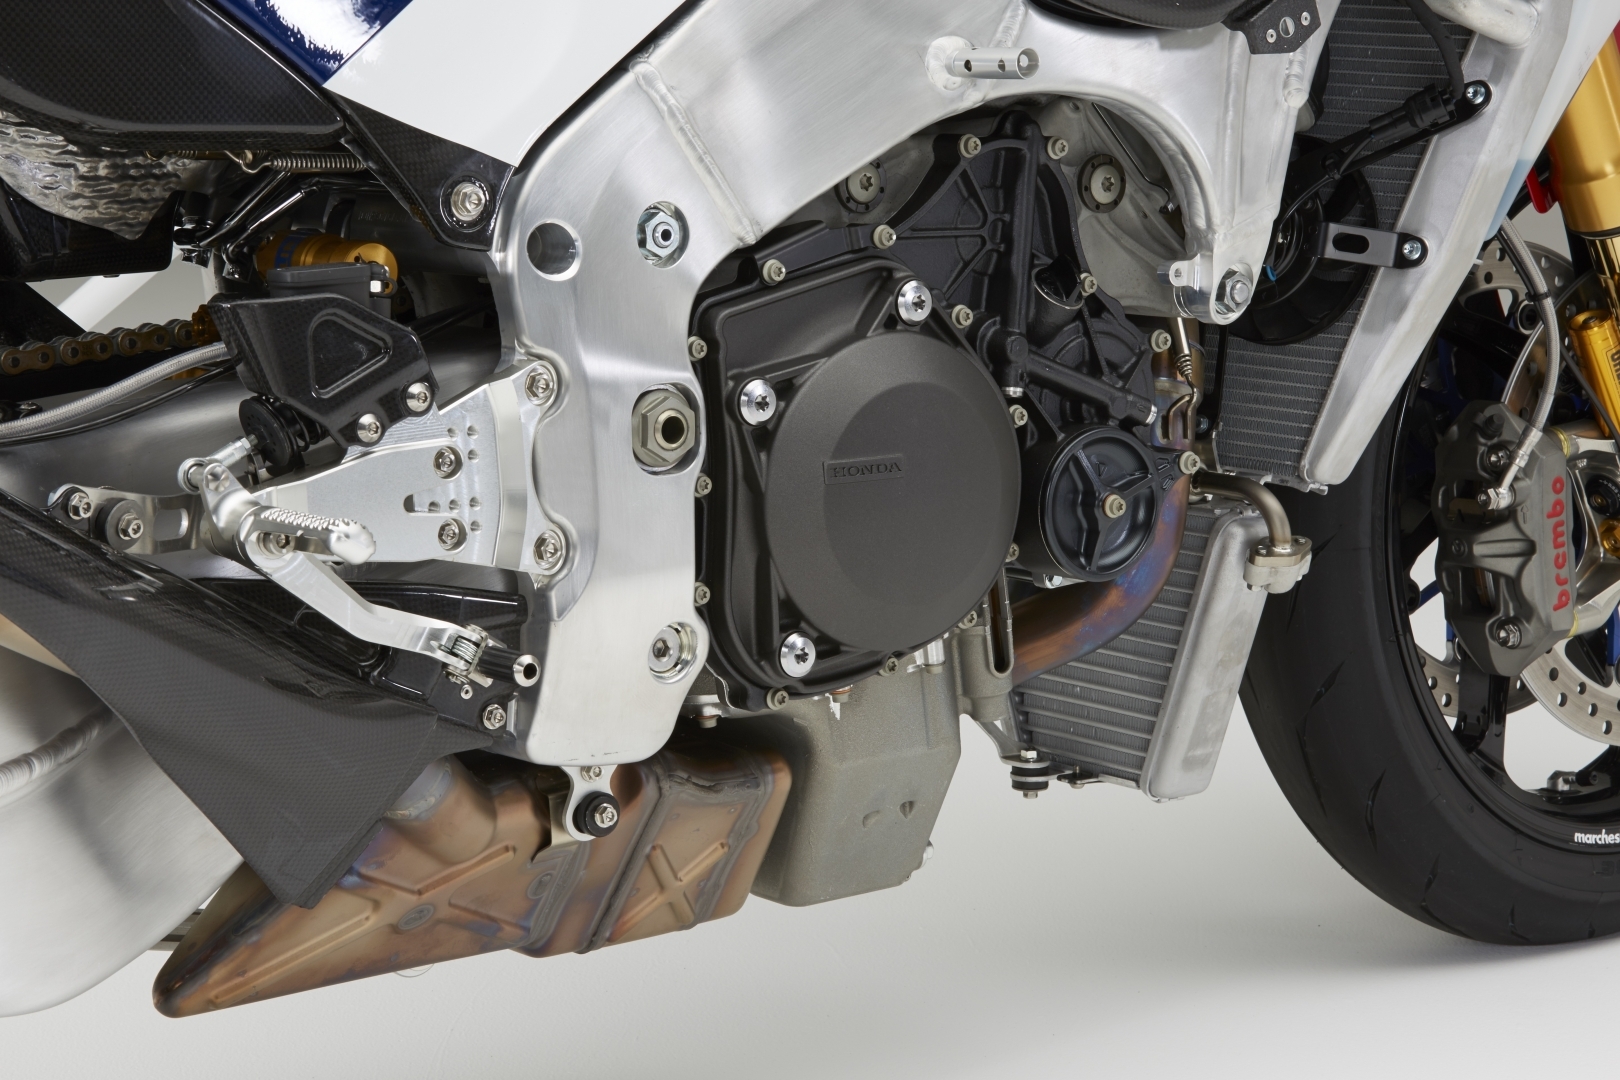 Honda Rc213v S Sport Bike Motorcycle Desktop Background